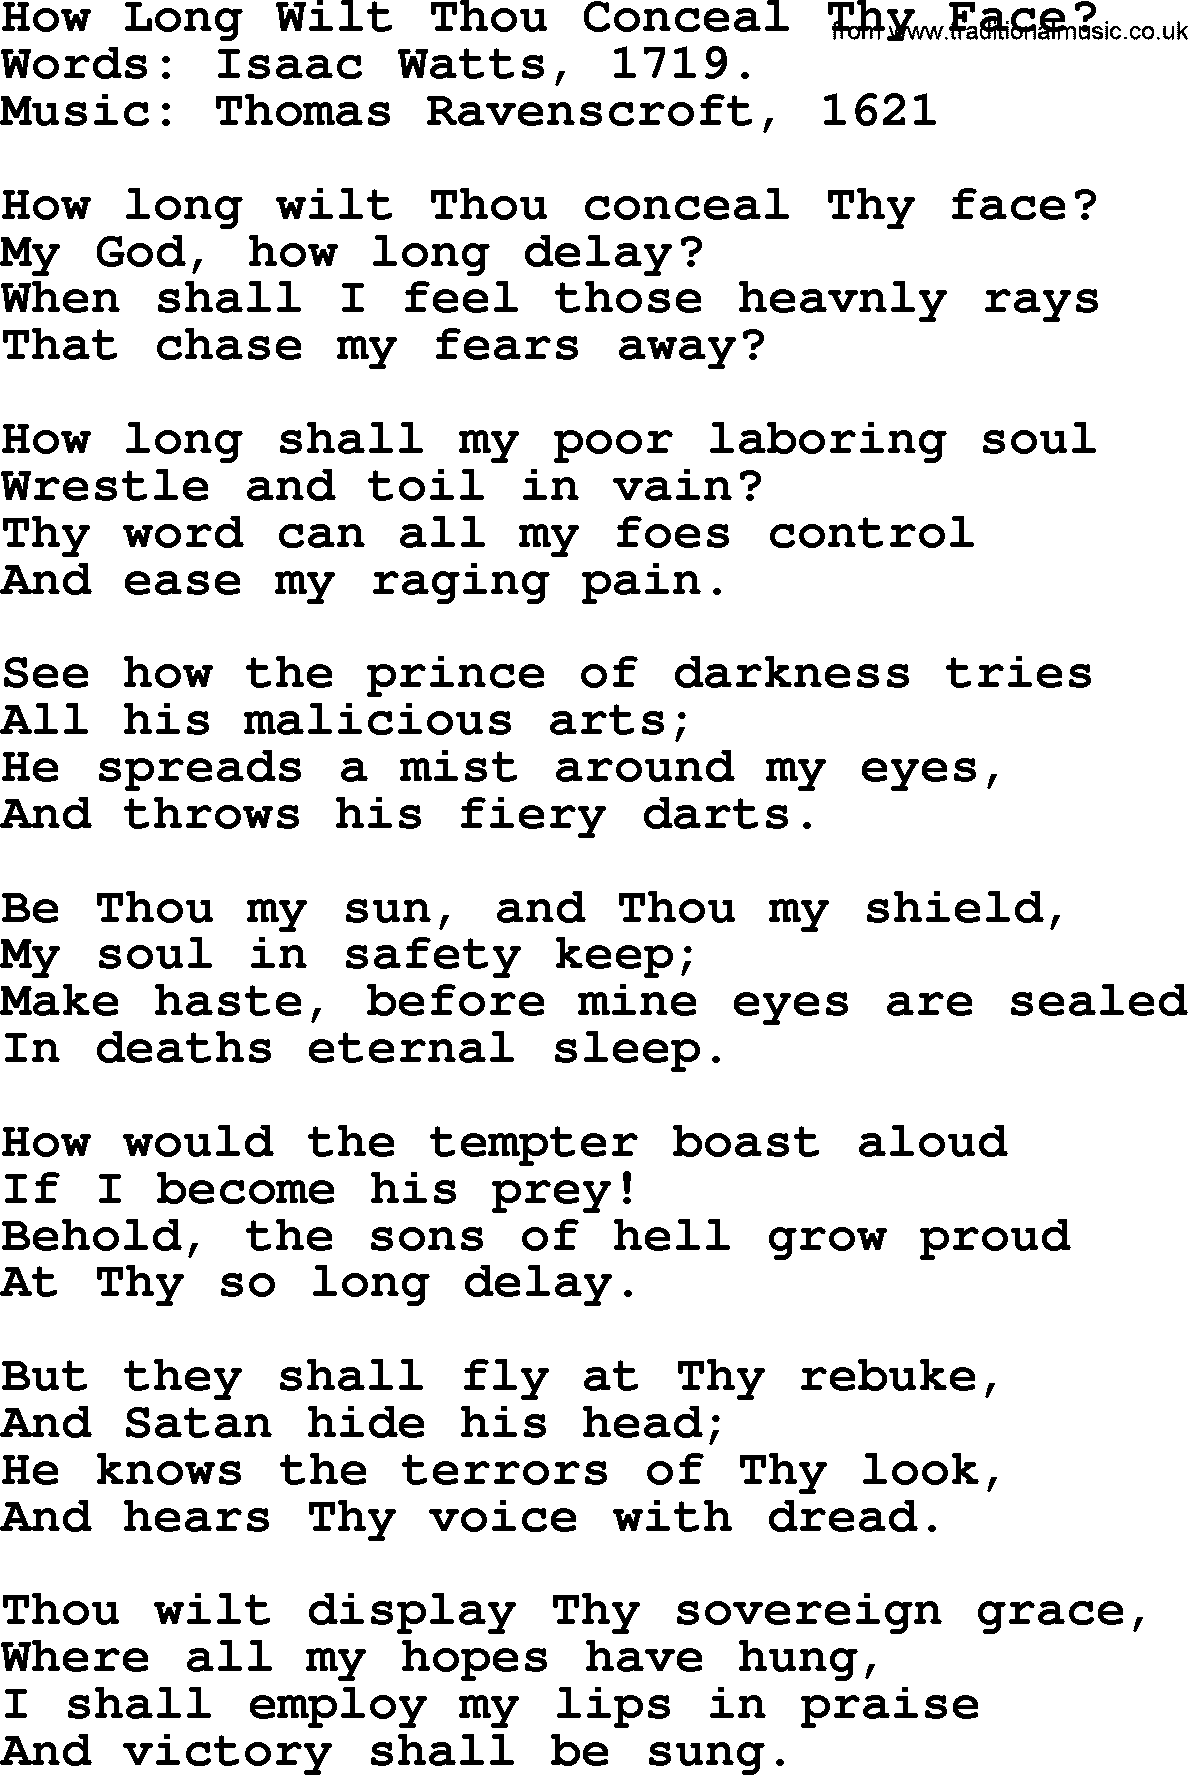 Isaac Watts Christian hymn: How Long Wilt Thou Conceal Thy Face_- lyricss